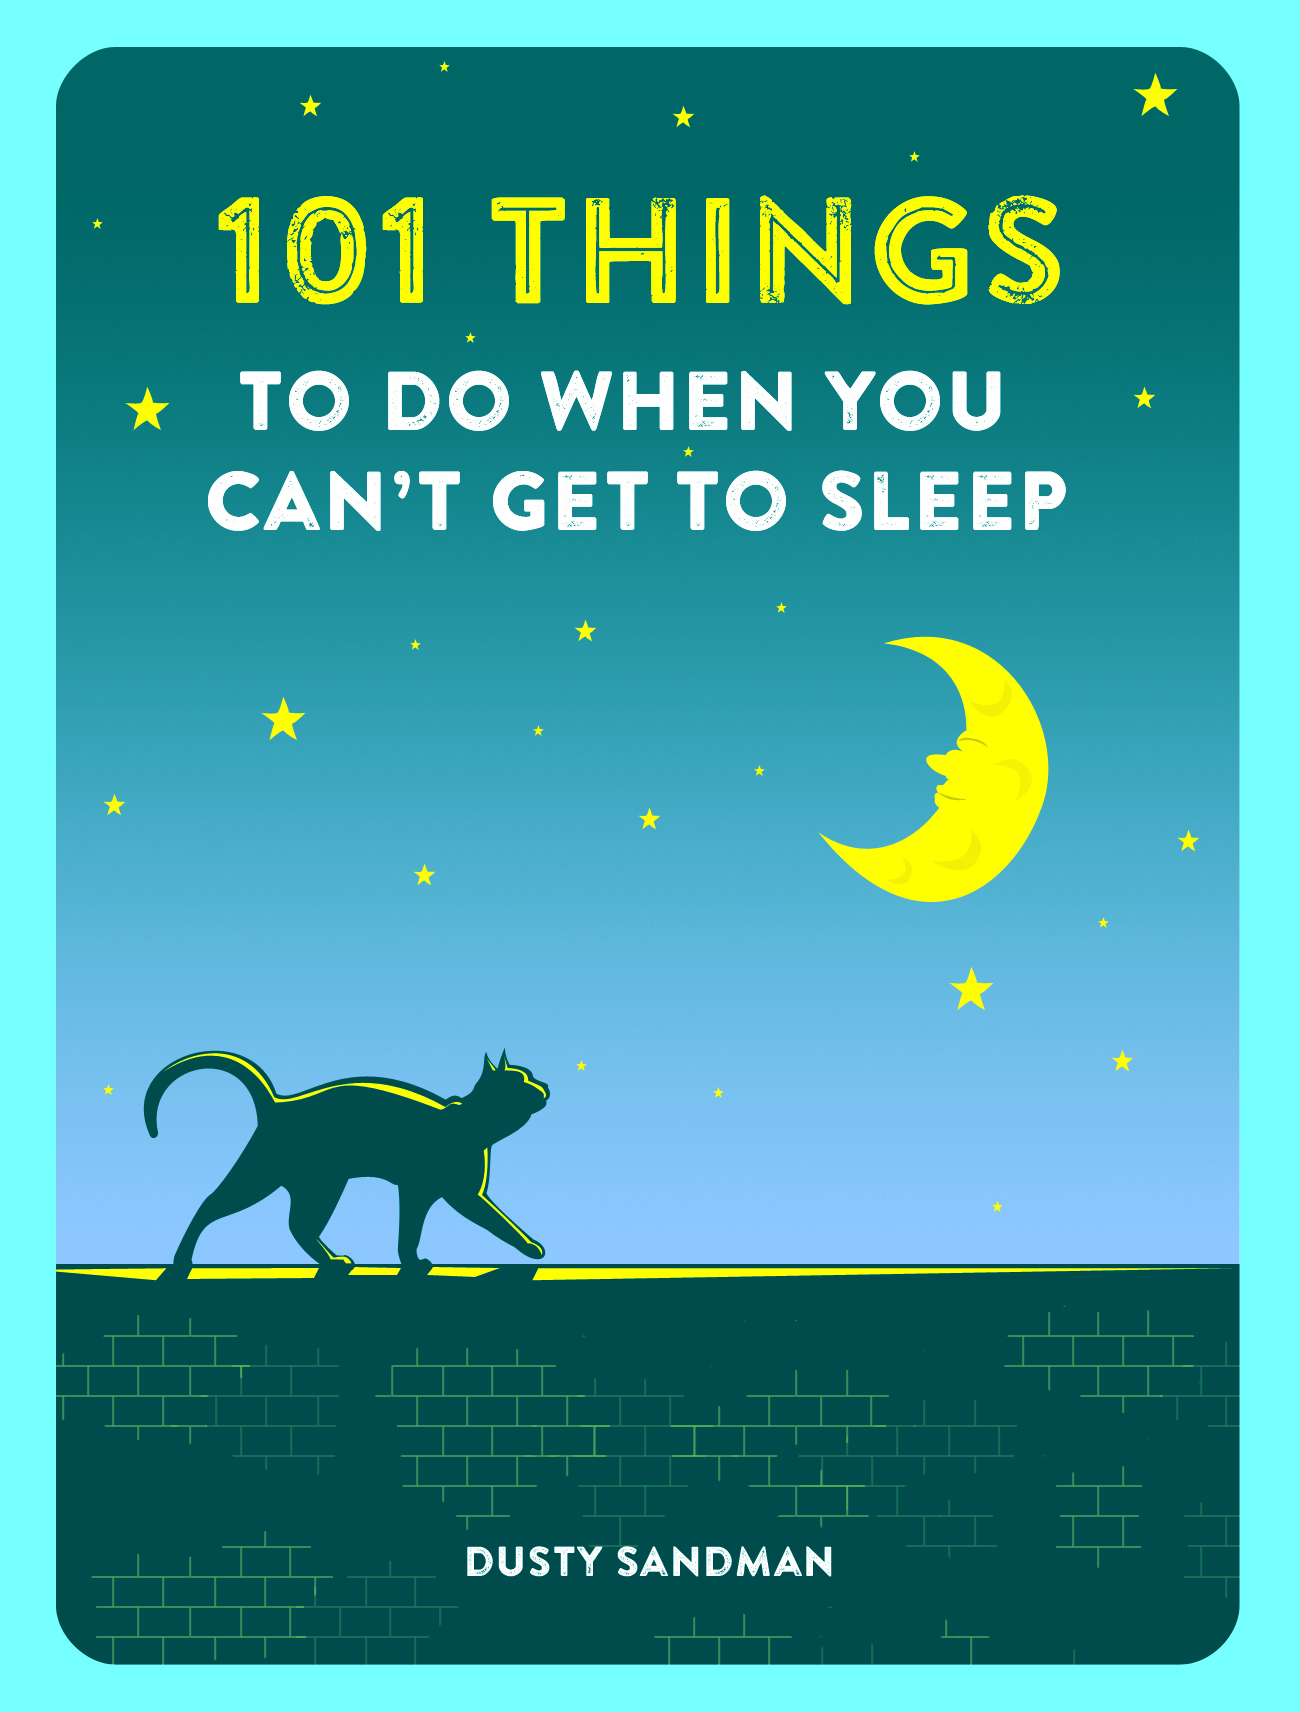 101 things to help you sleep | papercut